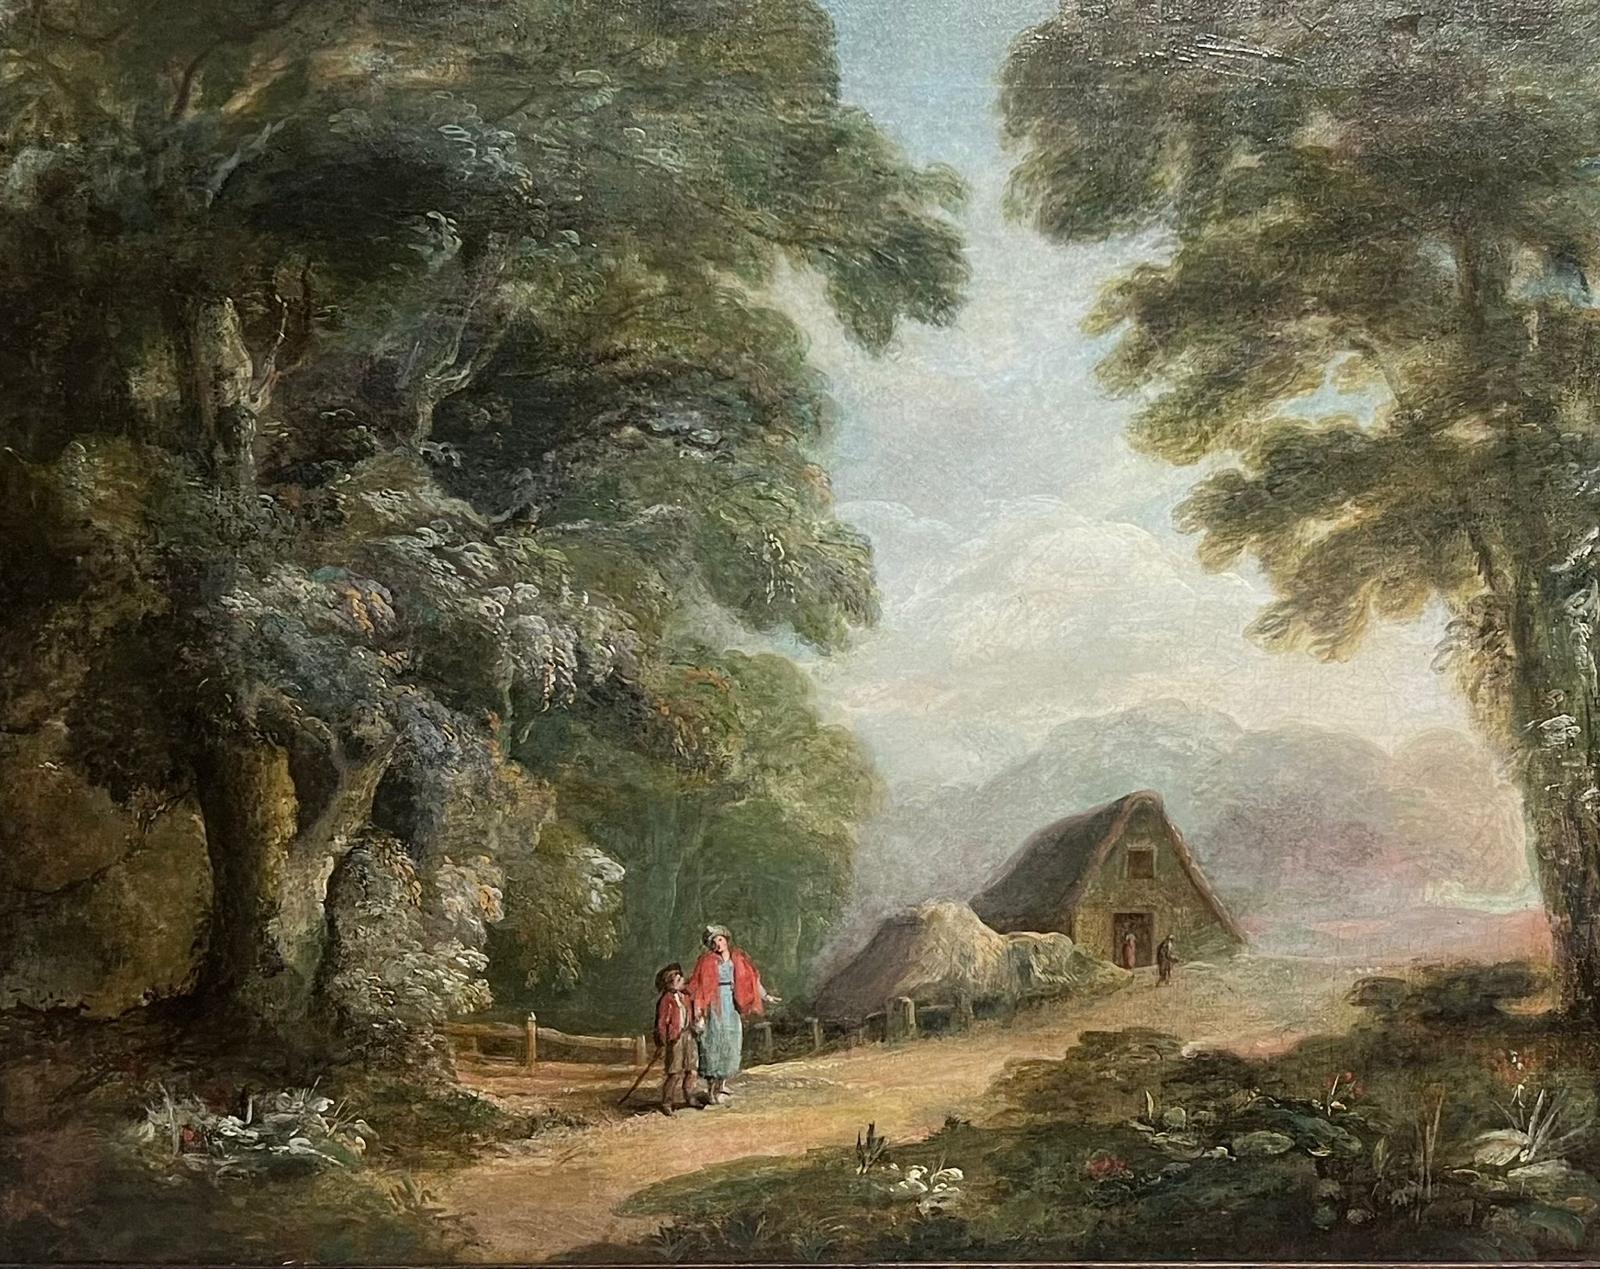 Thomas Barker of Bath Landscape Painting - Fine c. 1800s English Country Landscape Figures in Golden Light Wooded Landscape